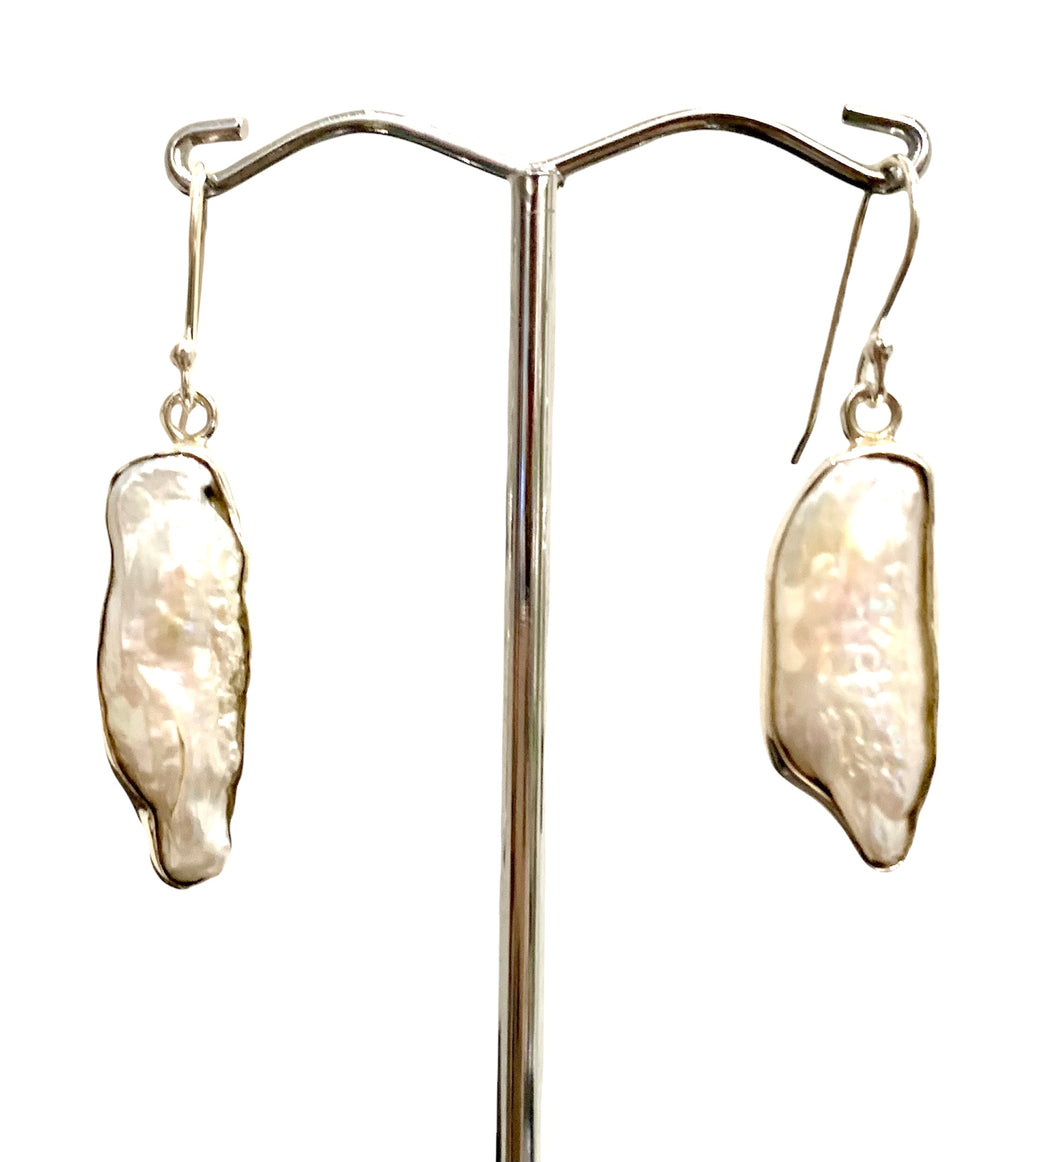 Freshwater pearl sterling silver earrings